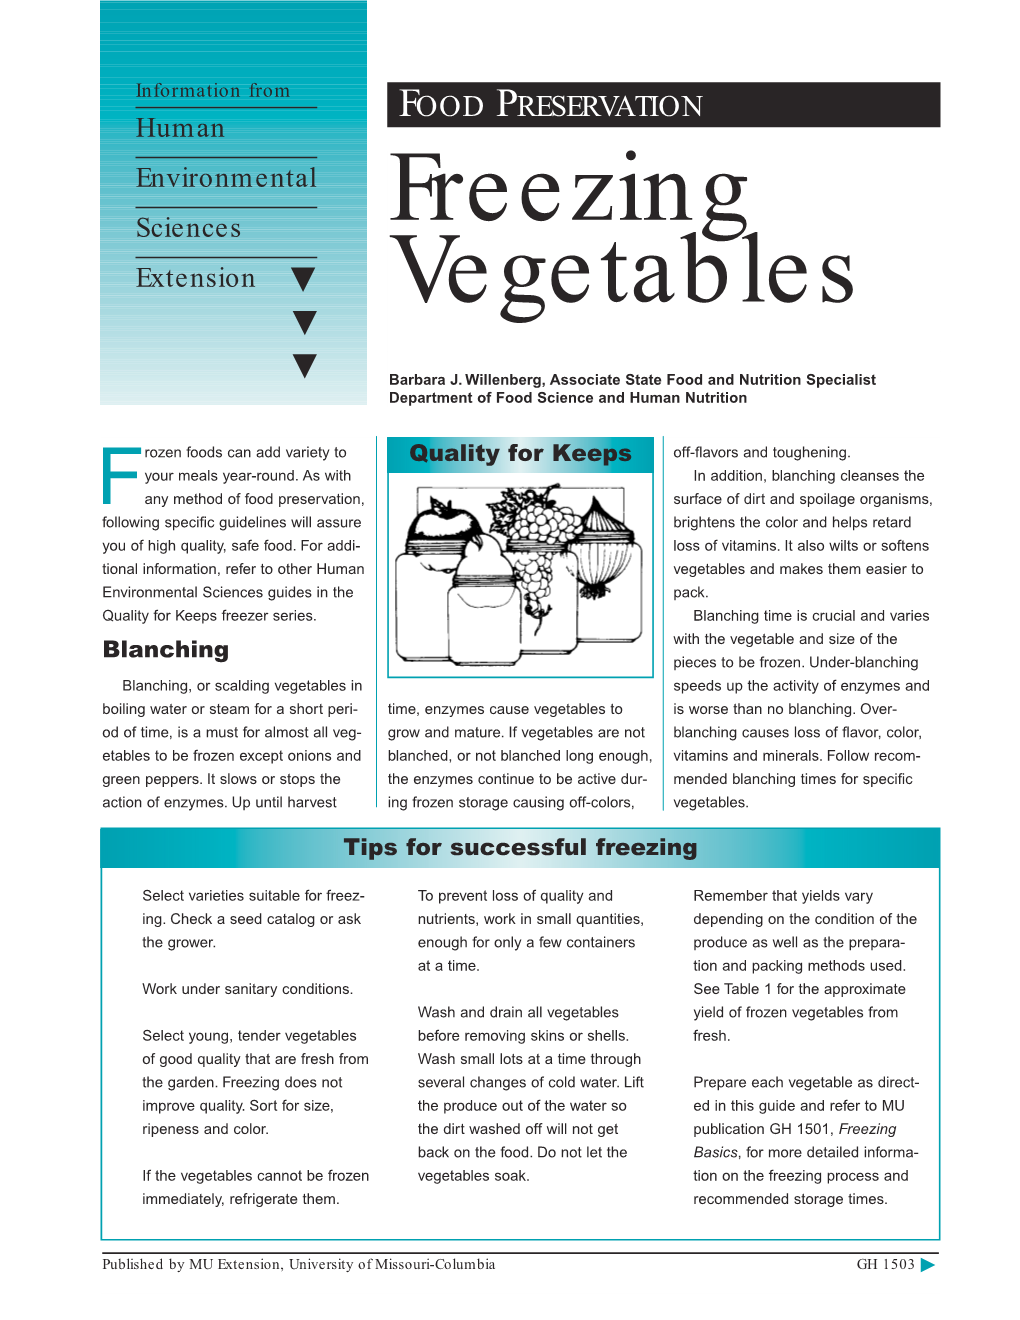 Freezing Vegetables